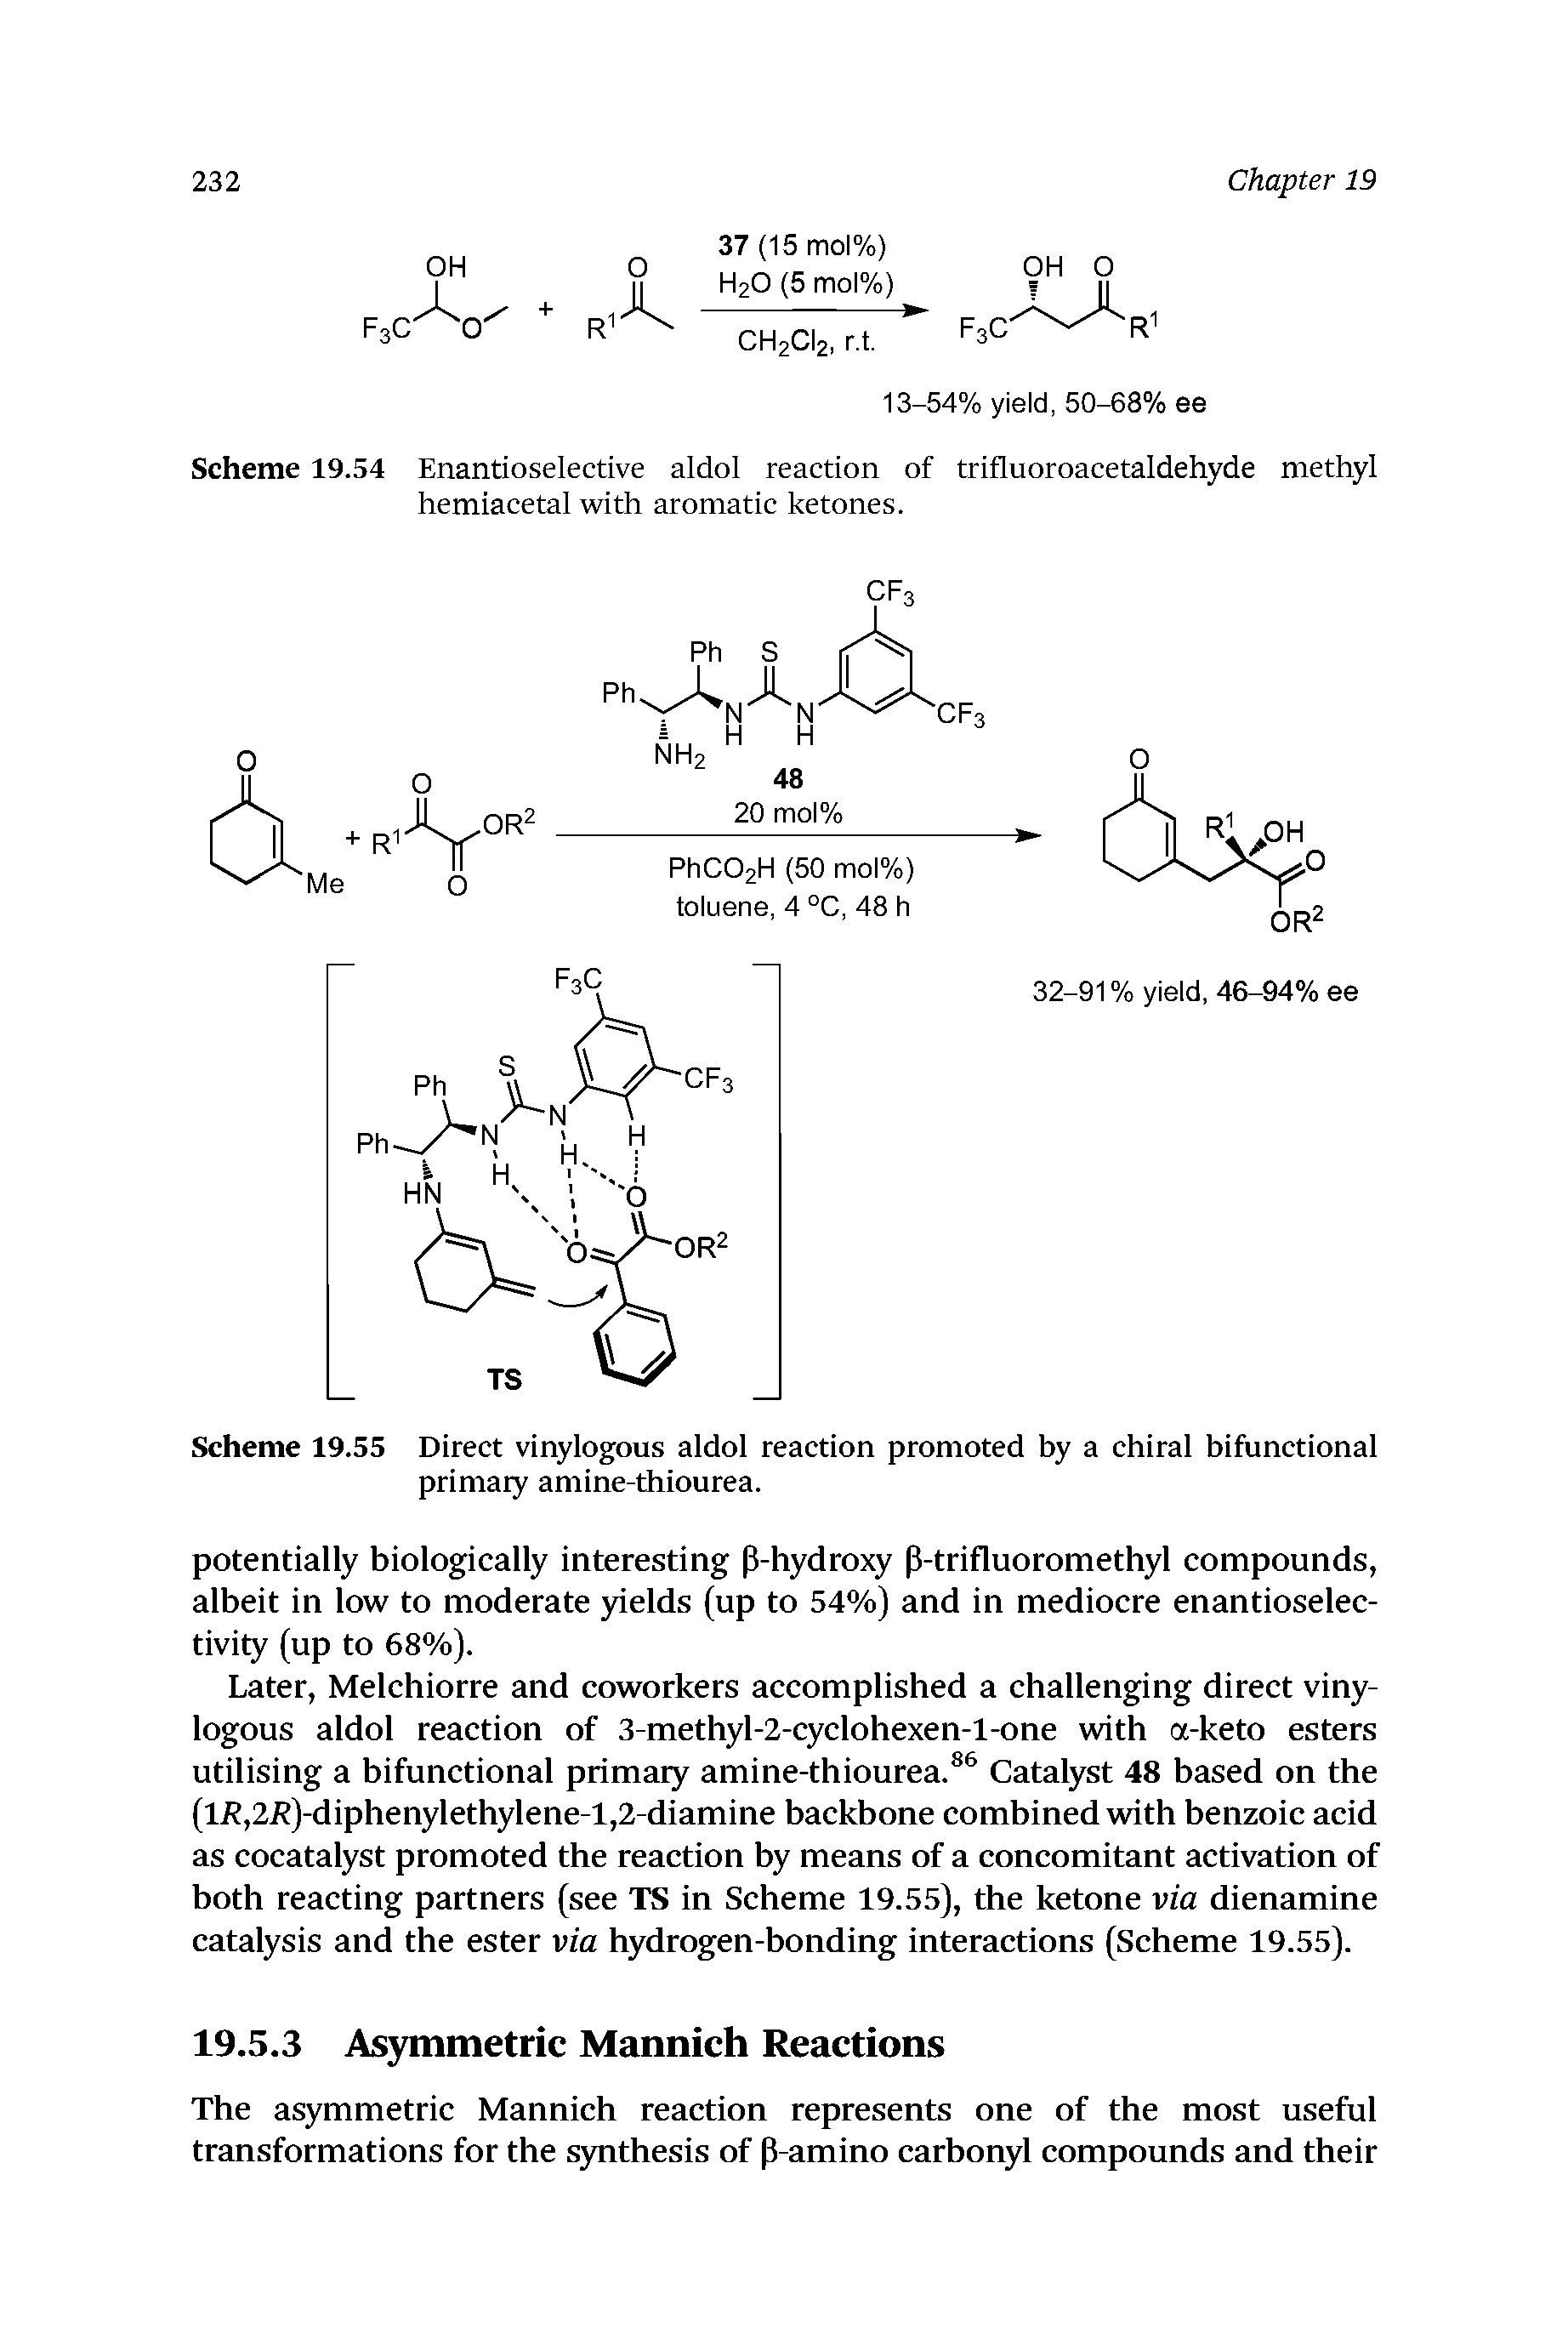 Scheme 19.54 Enantioselective aldol reaction of trifluoroacetaldehyde methyl hemiacetal with aromatic ketones.